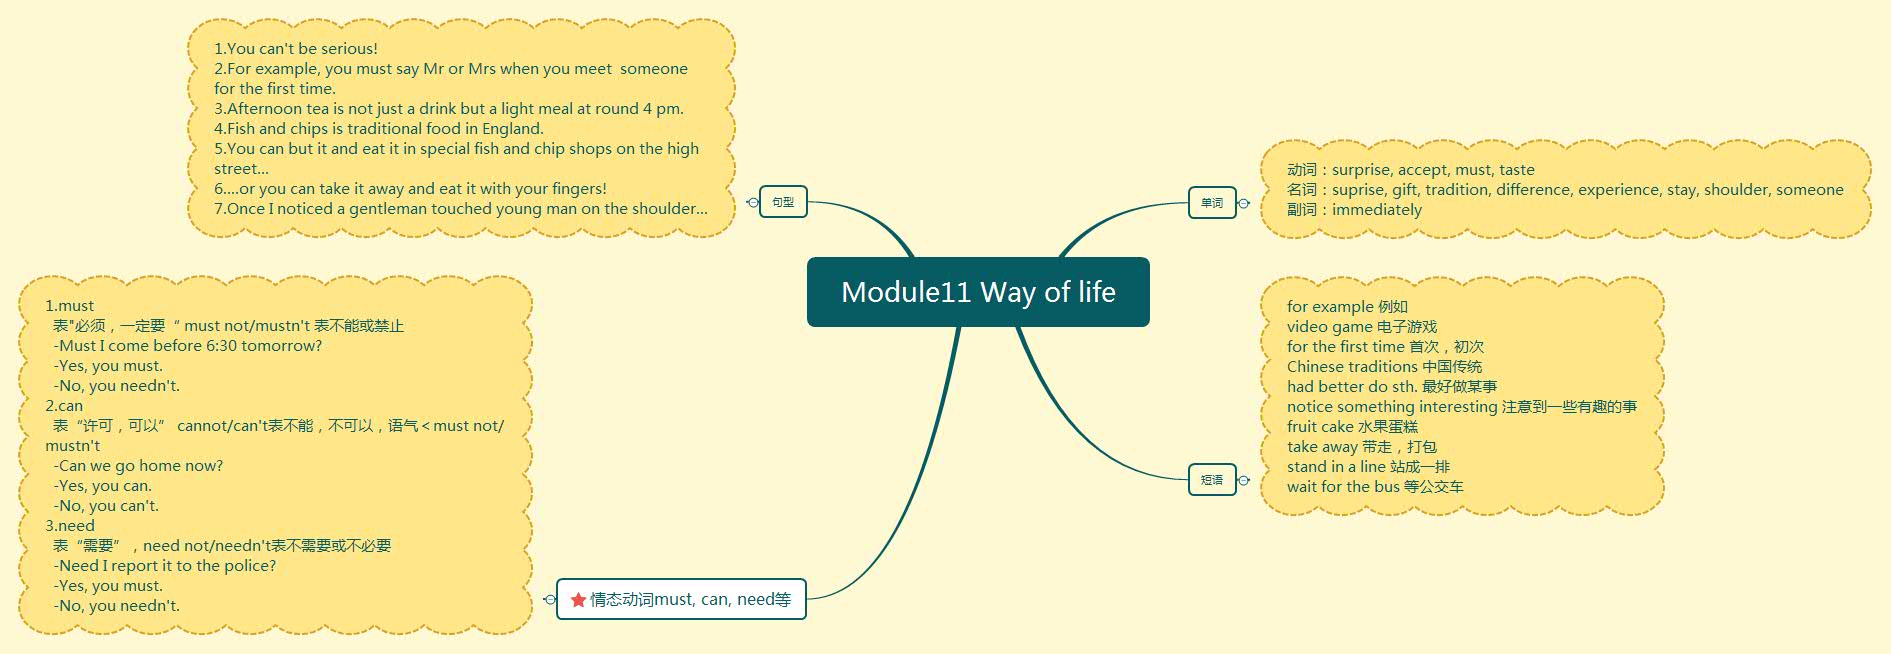 Module11 Way of life.jpg